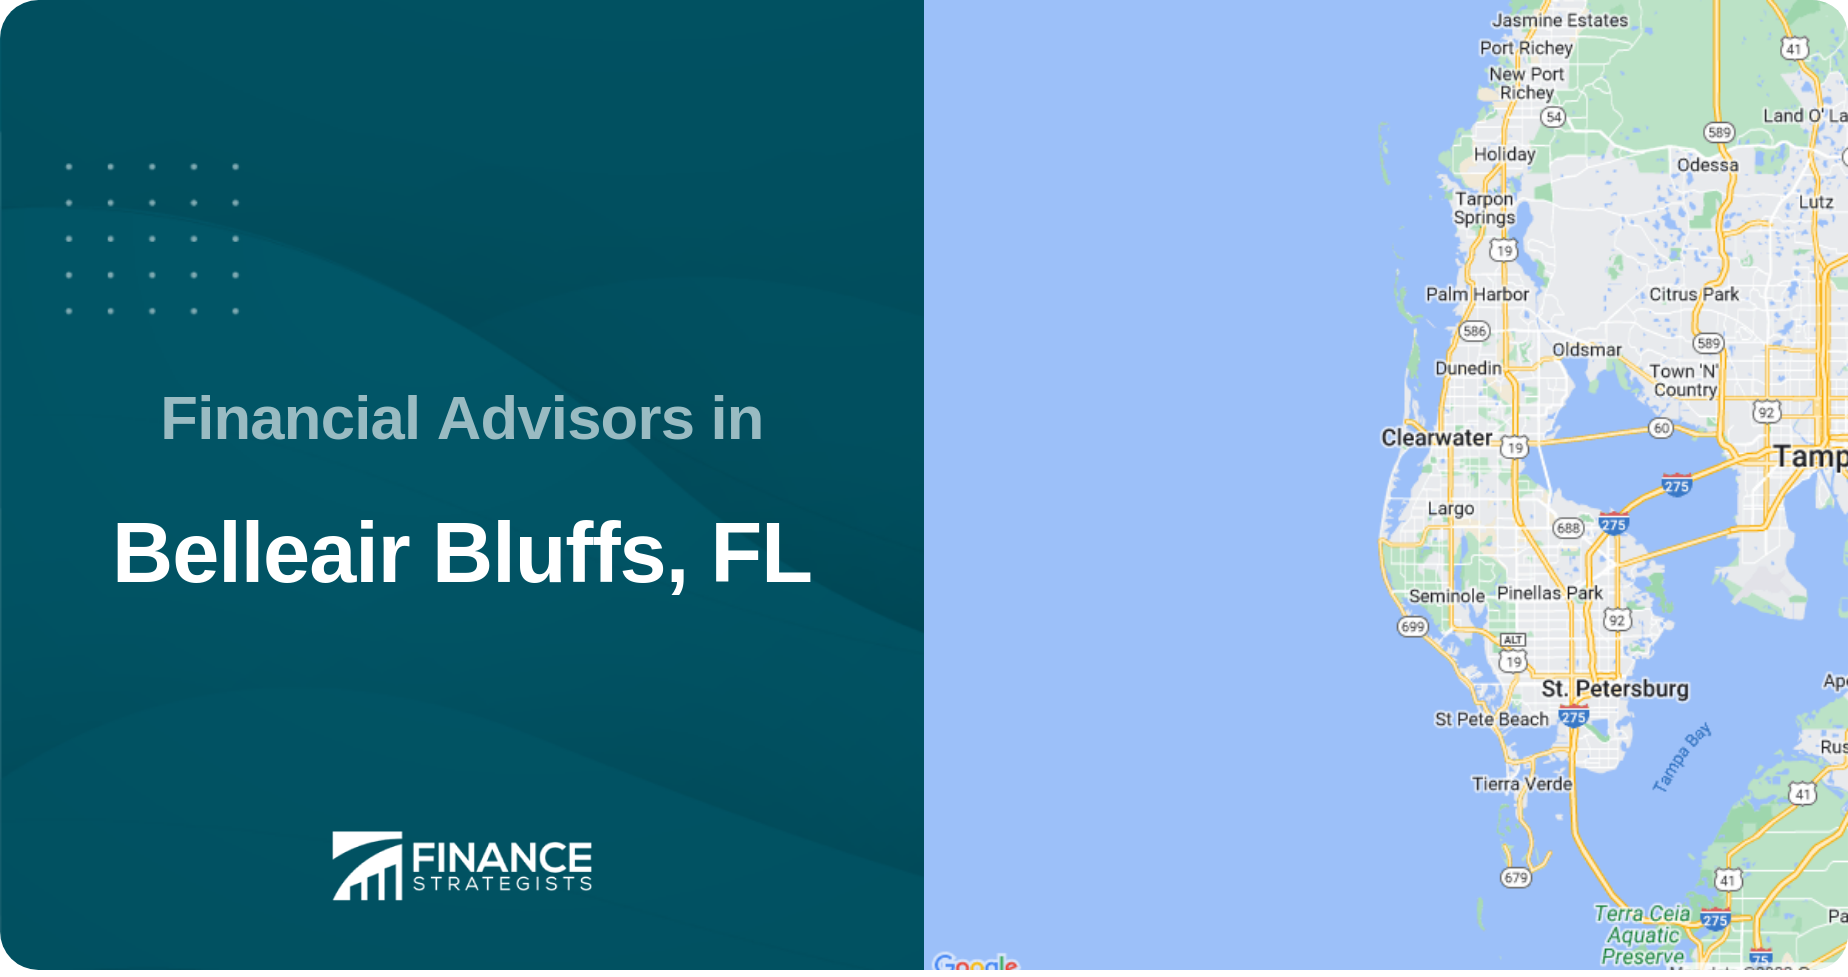 Financial Advisors in Belleair Bluffs, FL